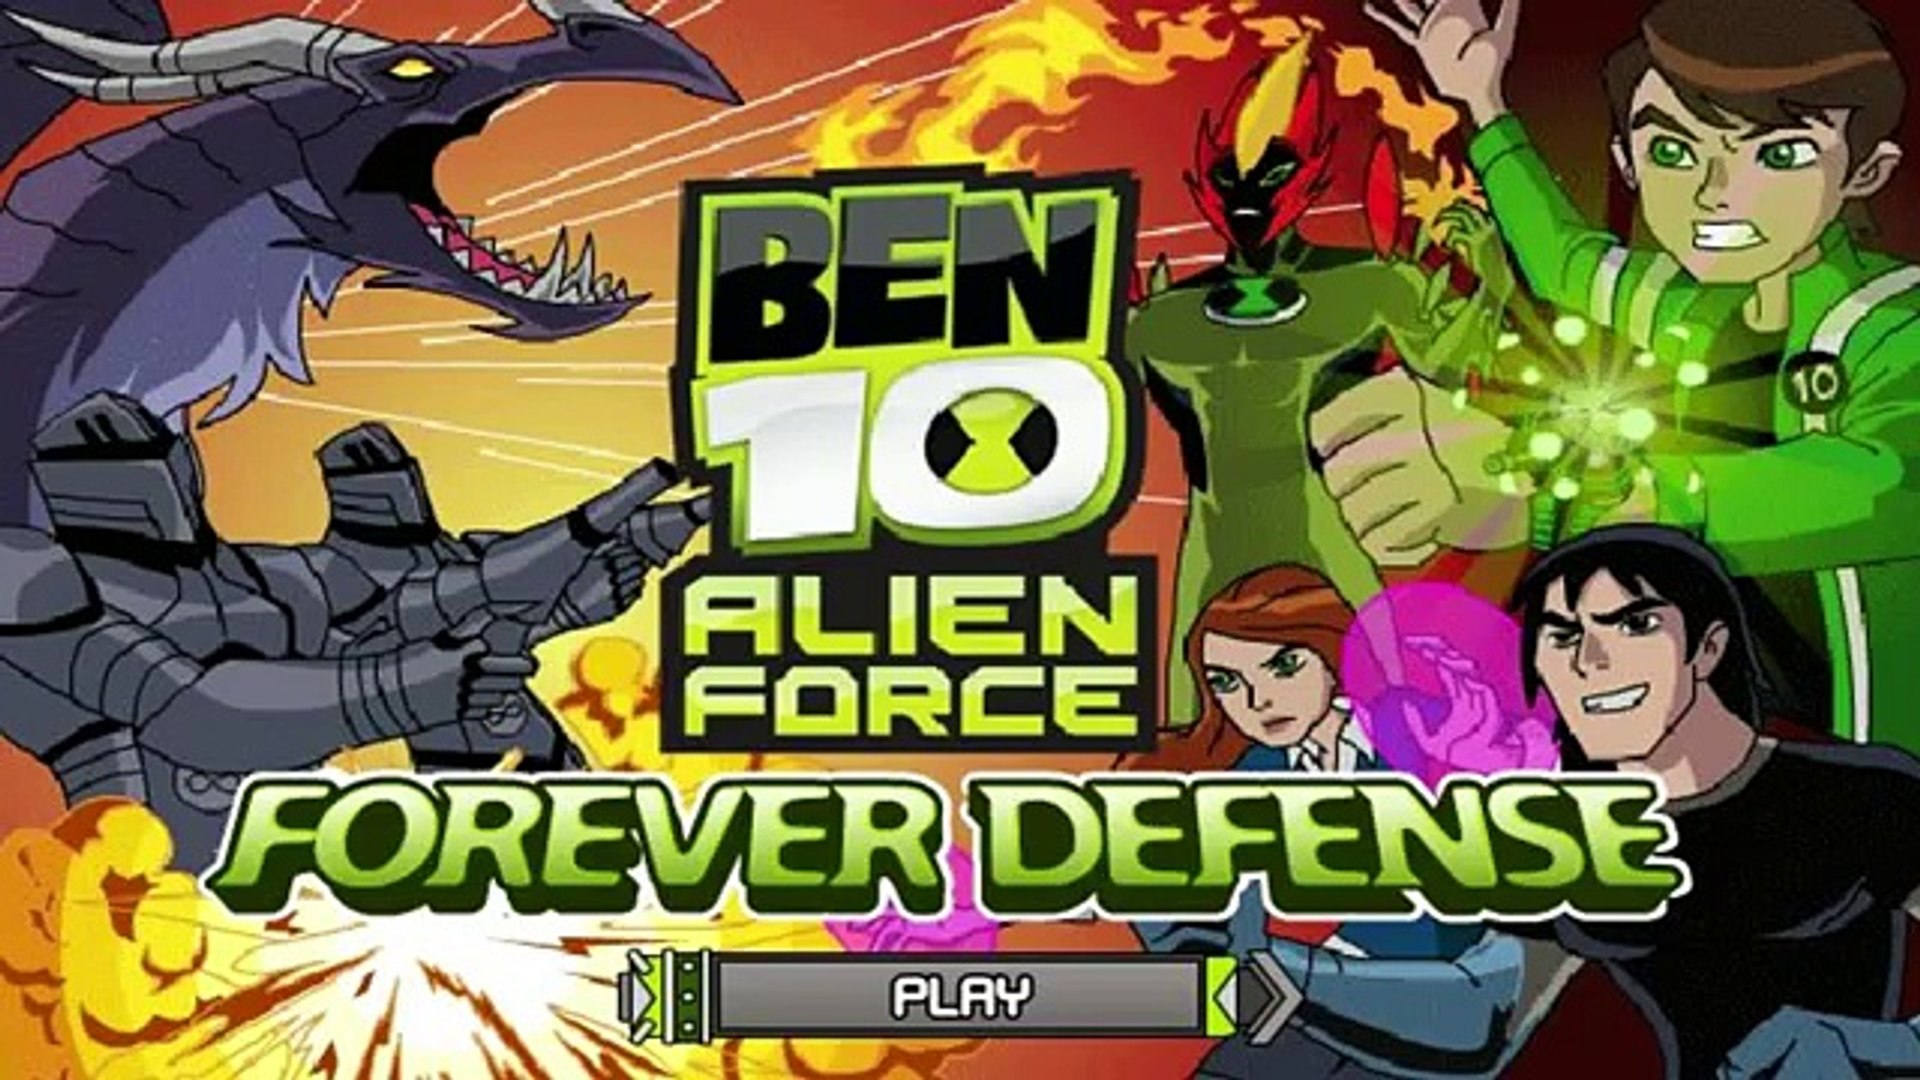 Juega a Ben 10, Juegos online gratis de Ben 10